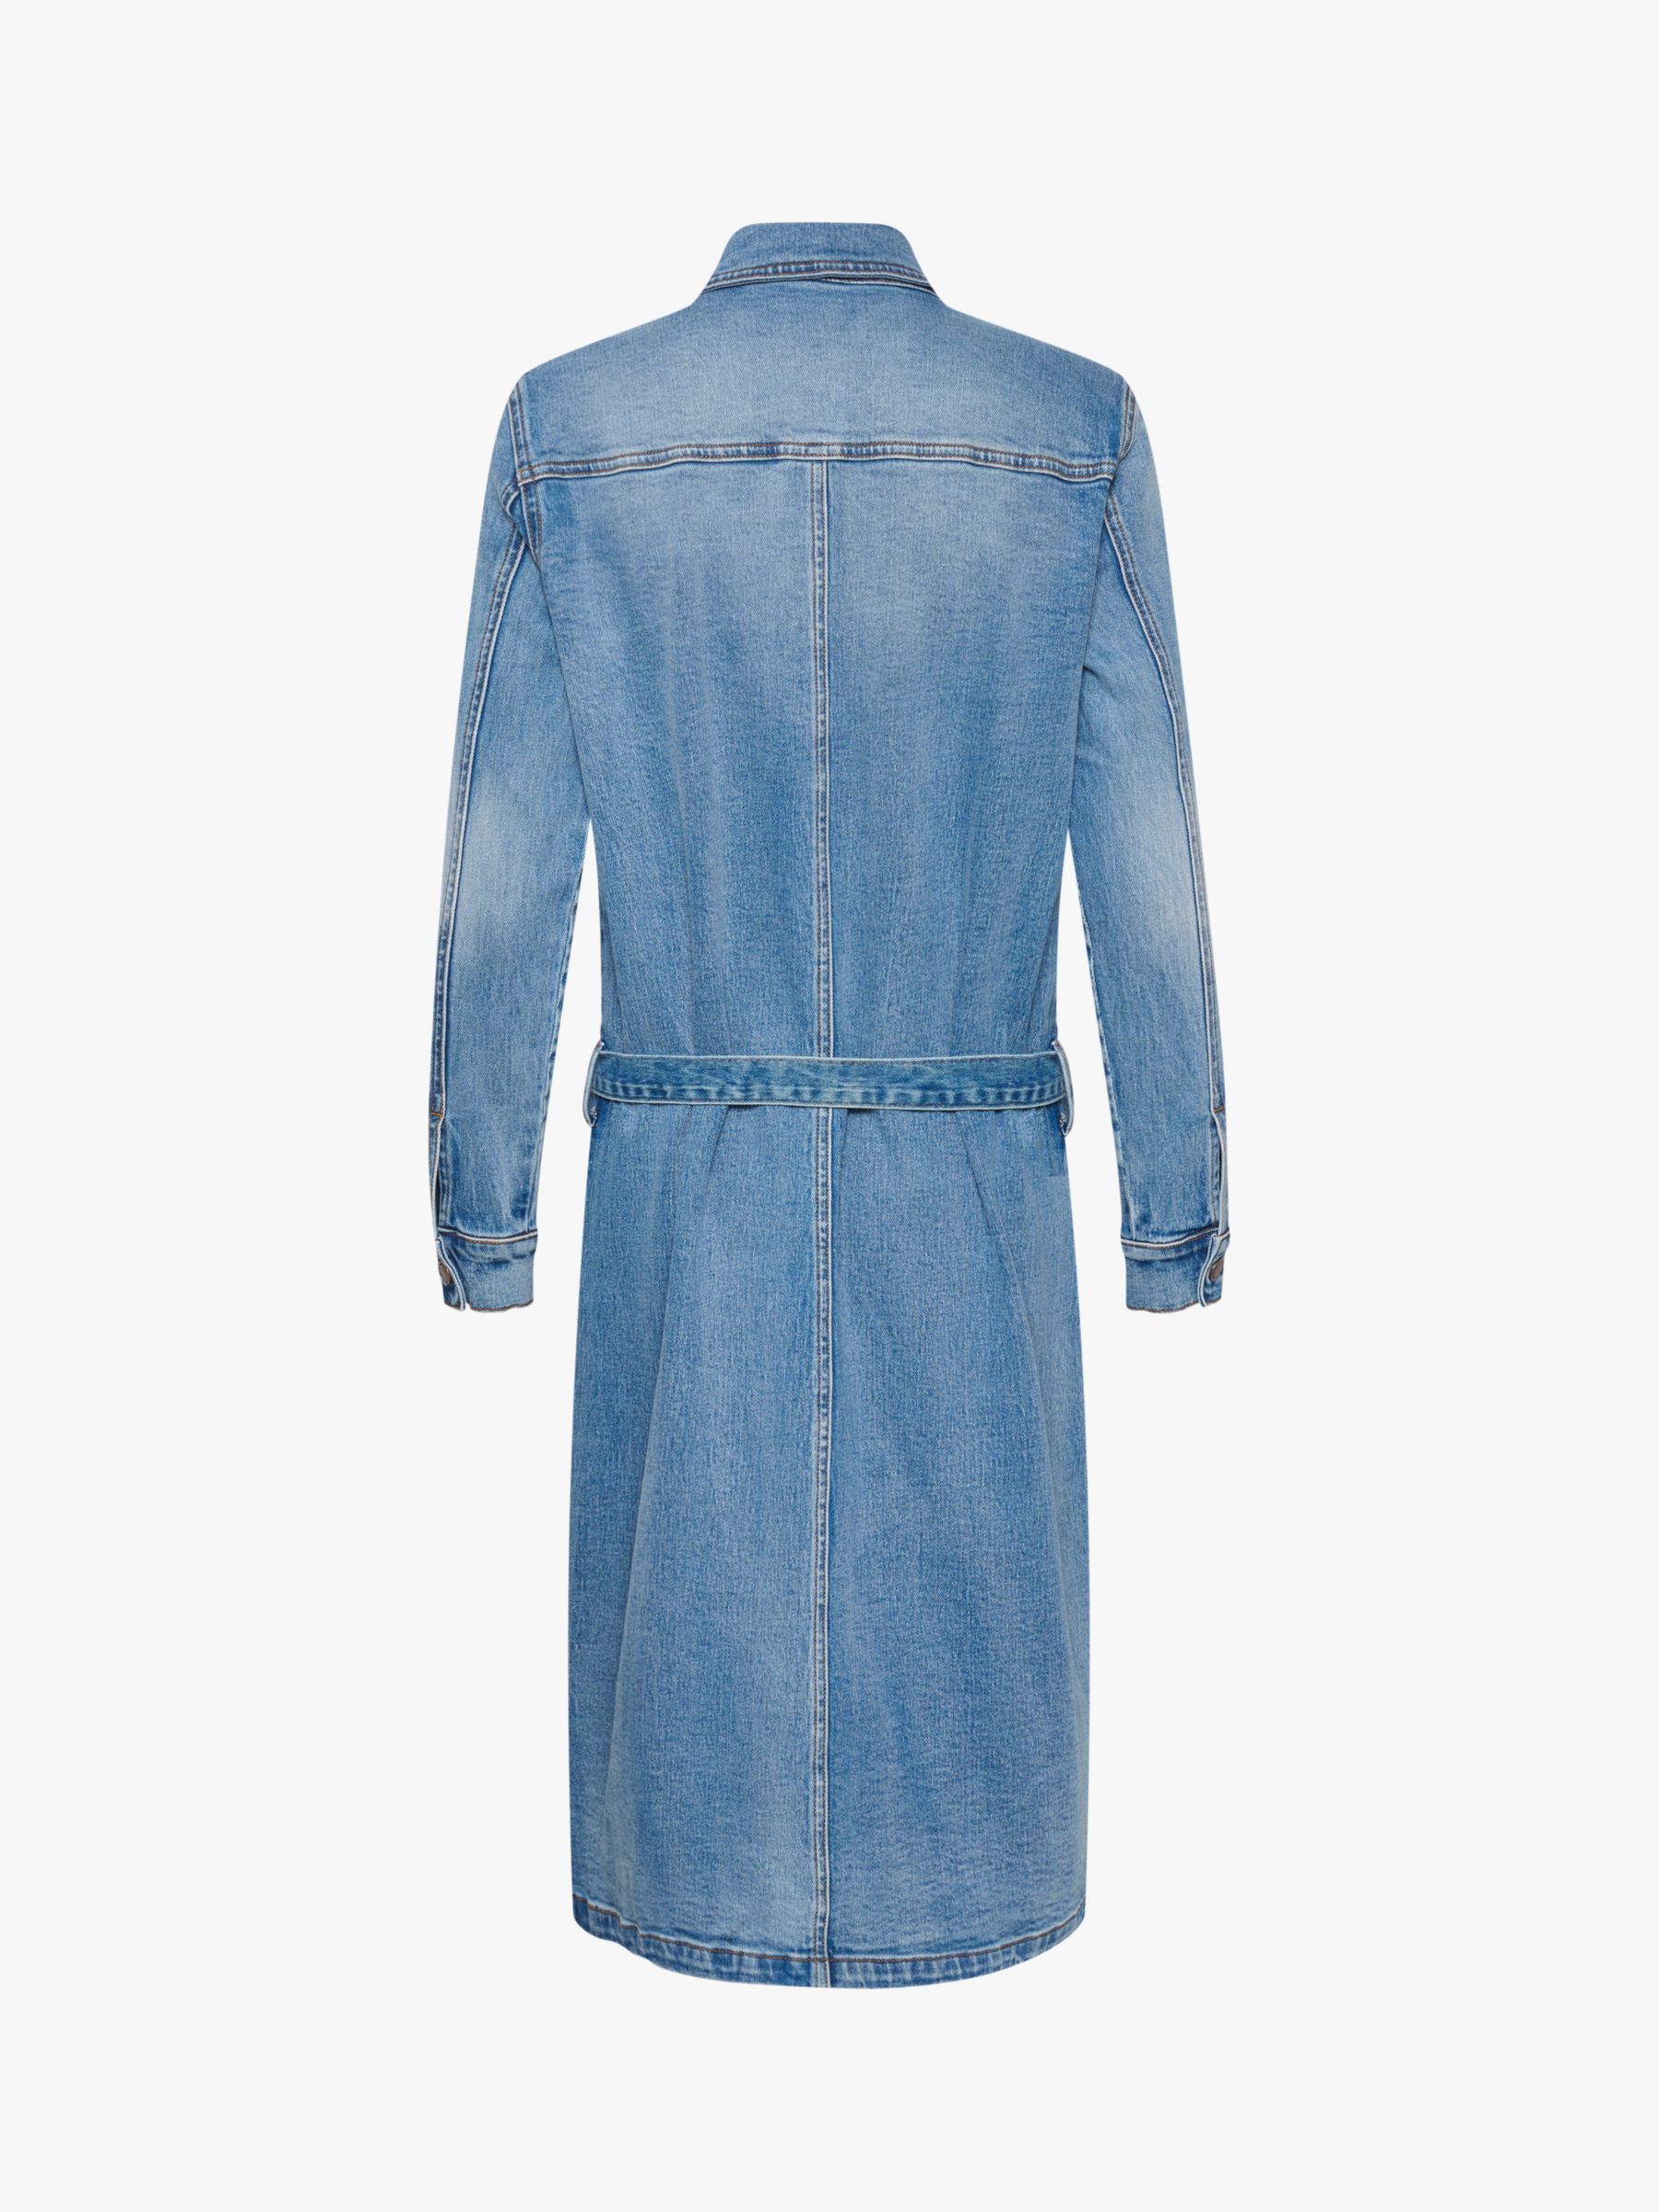 MY ESSENTIAL WARDROBE Dango Denim Shirt Dress, Light Blue Wash, 8